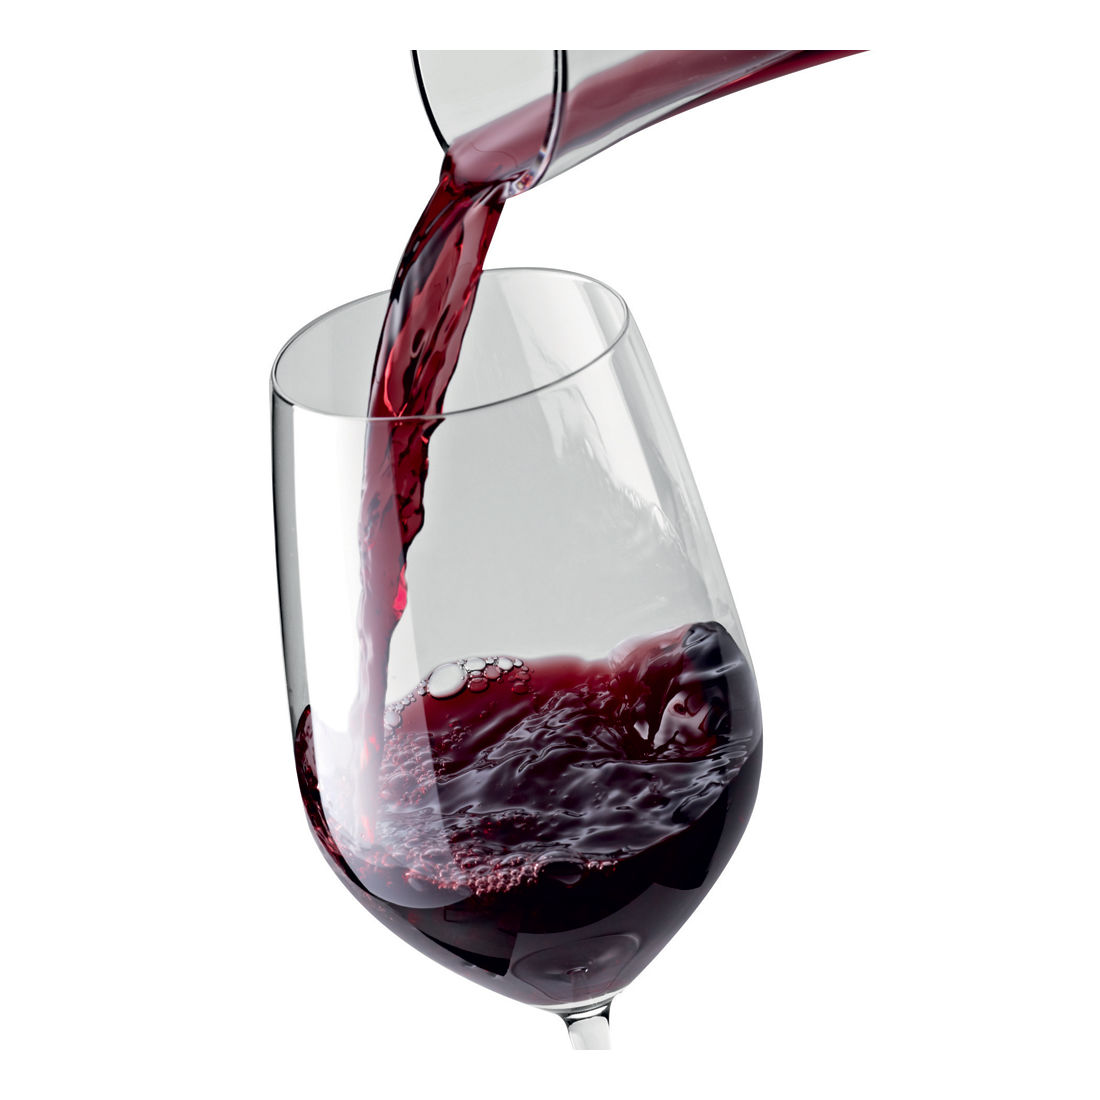 Stolzle Grand Cuvee Bordeaux Set of 6 - Signa Glassware